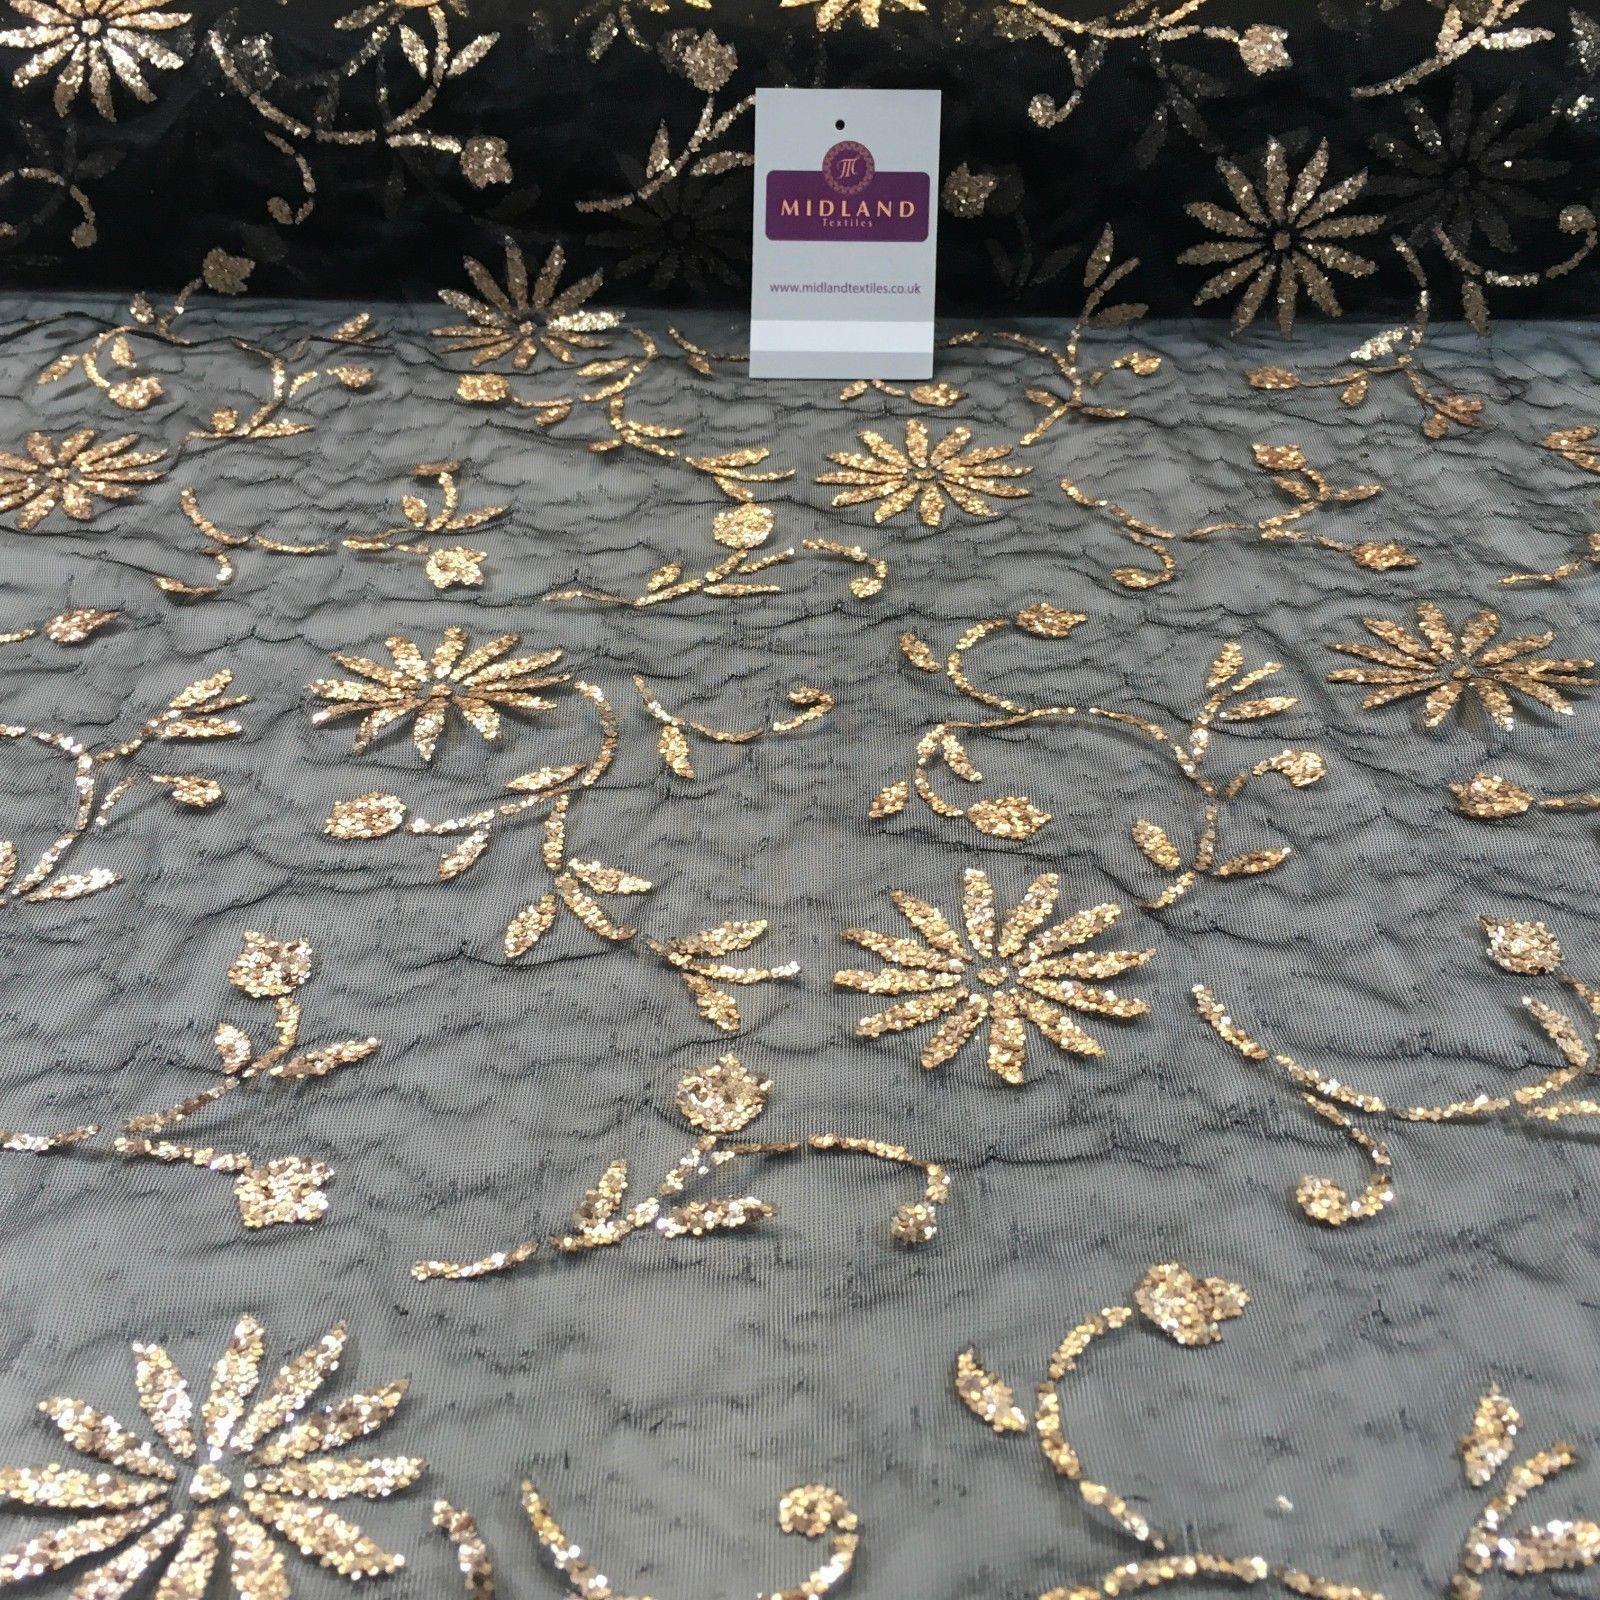 Matt Gold Floral Metallic Glitter black mesh net dress fabric 58 M781 -  Midland Textiles